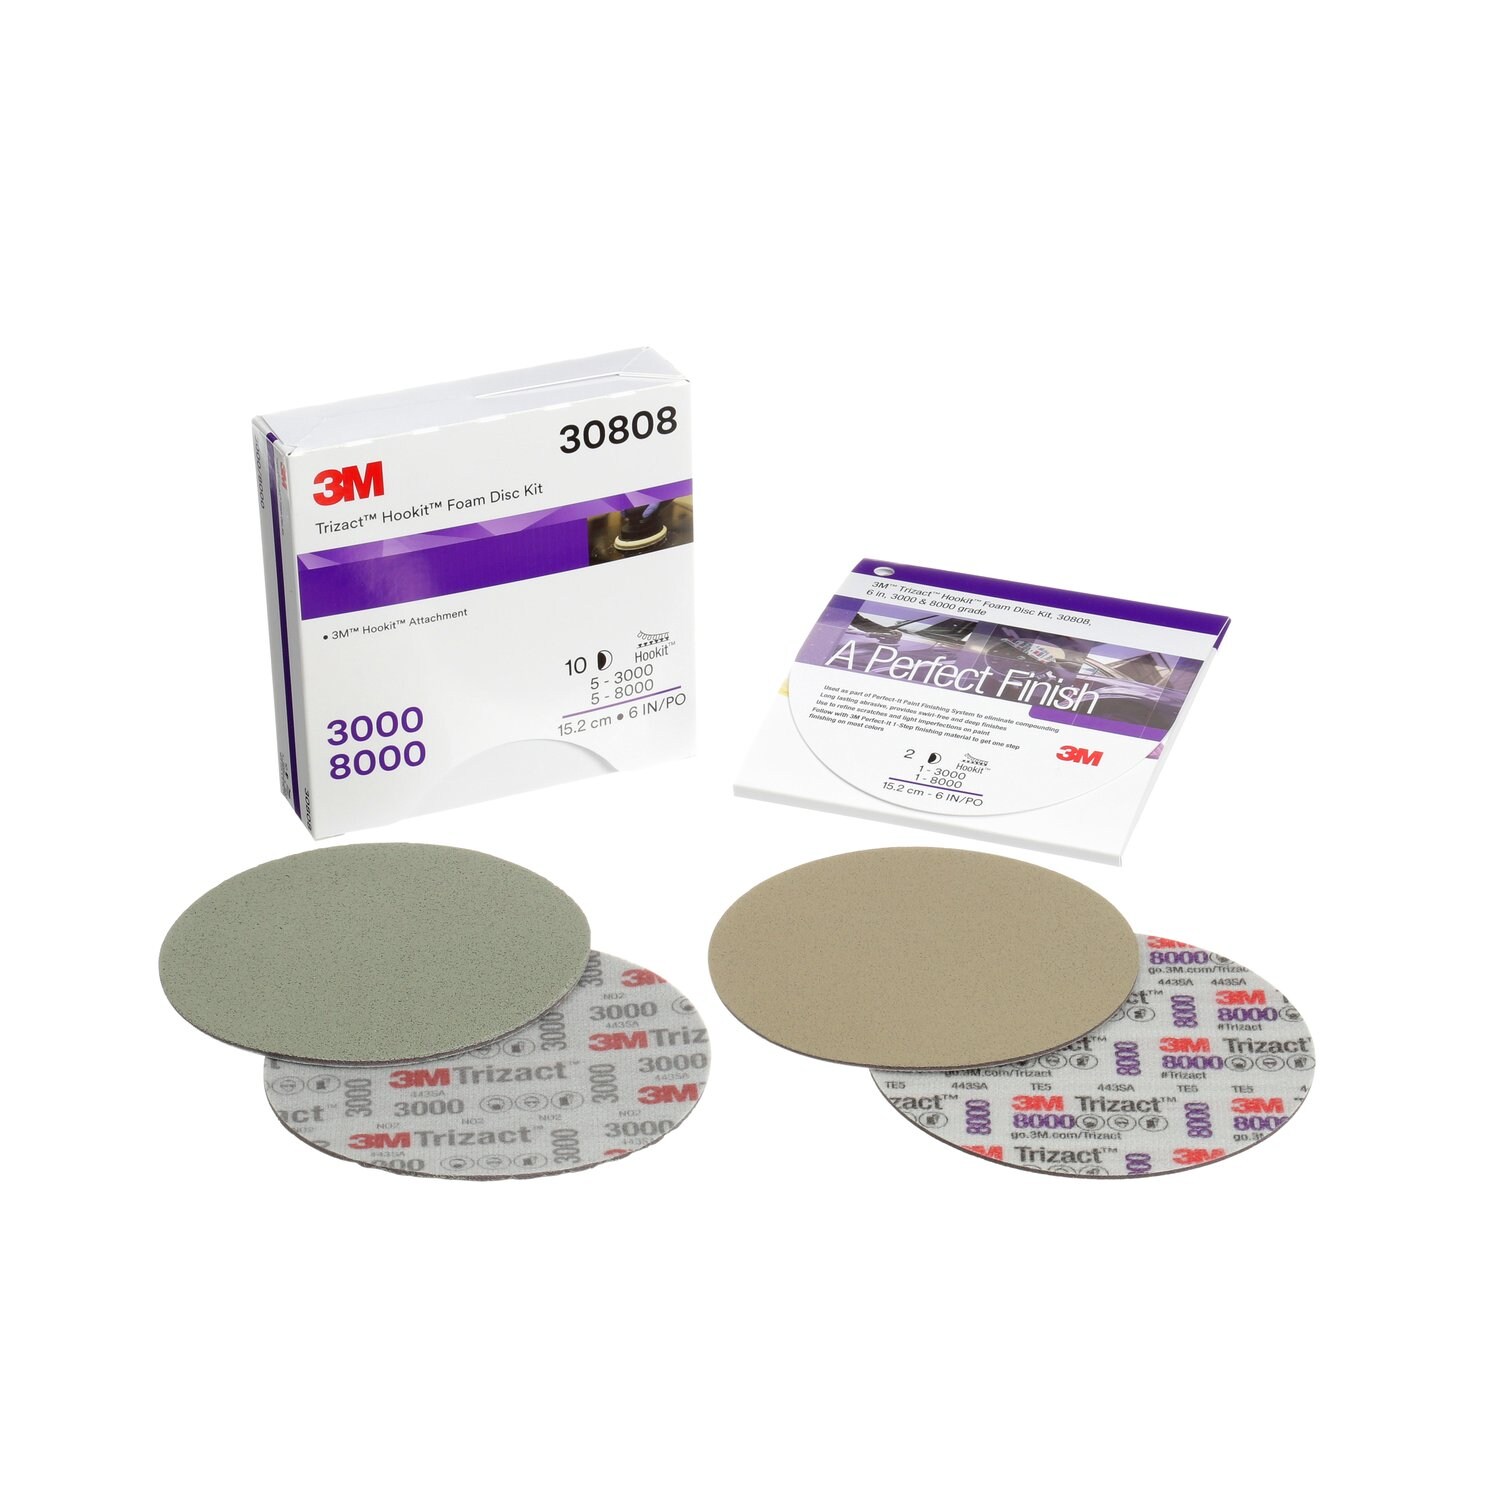 7100228805 - 3M Trizact Hookit Foam Disc Kit 30808, 6 in, 3000 and 8000, 2 Discs/Kit, 5 Kits/Carton, 4 Cartons/Case